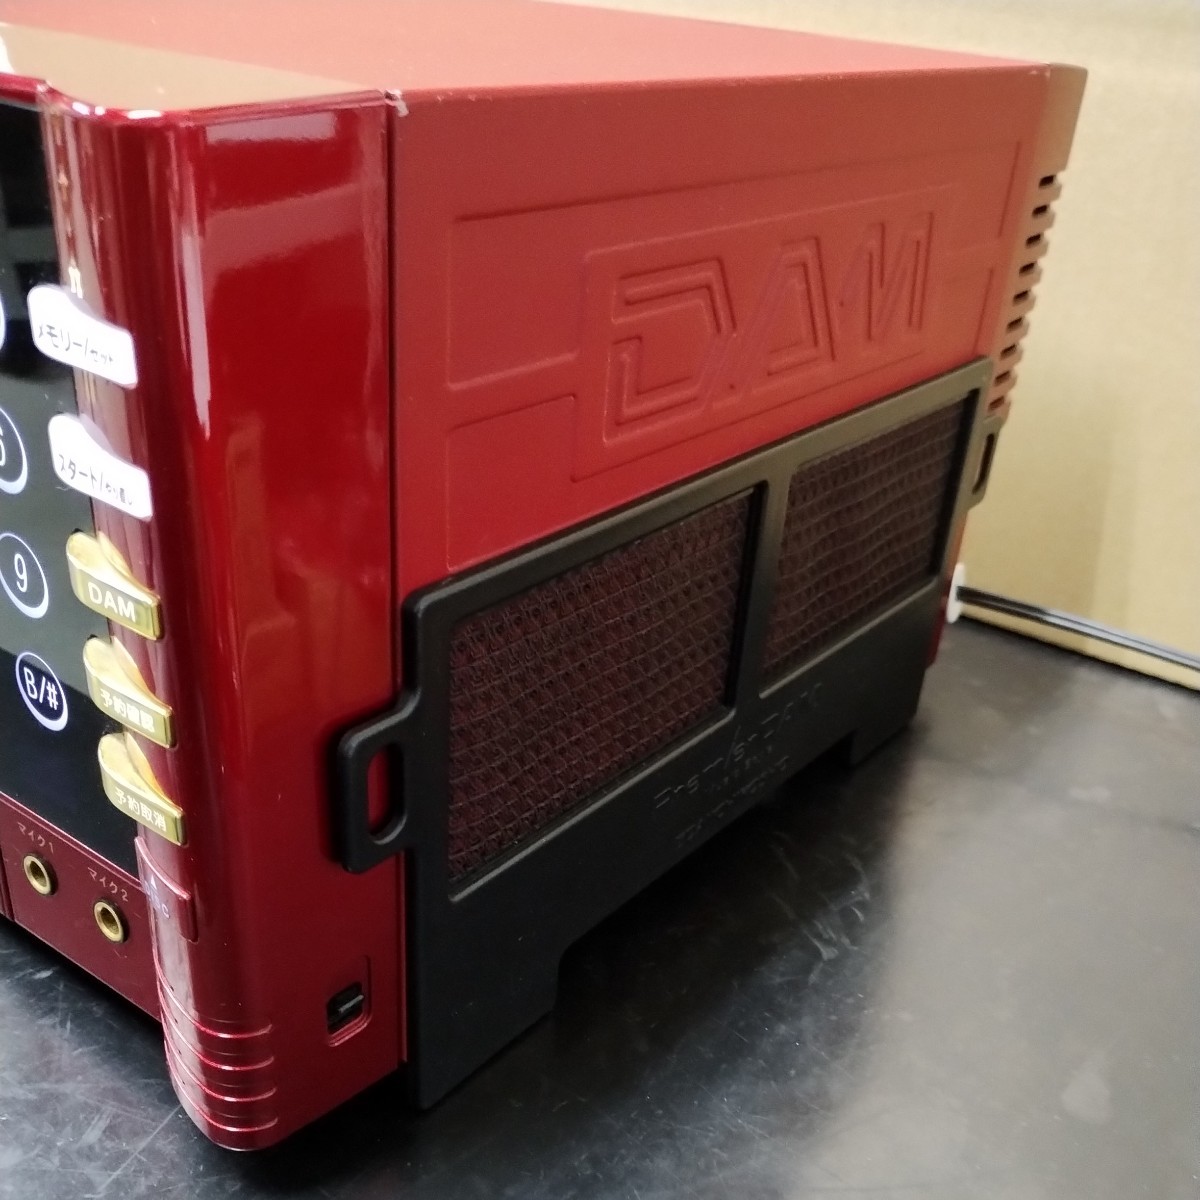 SFZ5 業務用 第一興商 DAM コントローラー DAM-XG1000Ⅱ 赤 中古 点検動作品の画像8